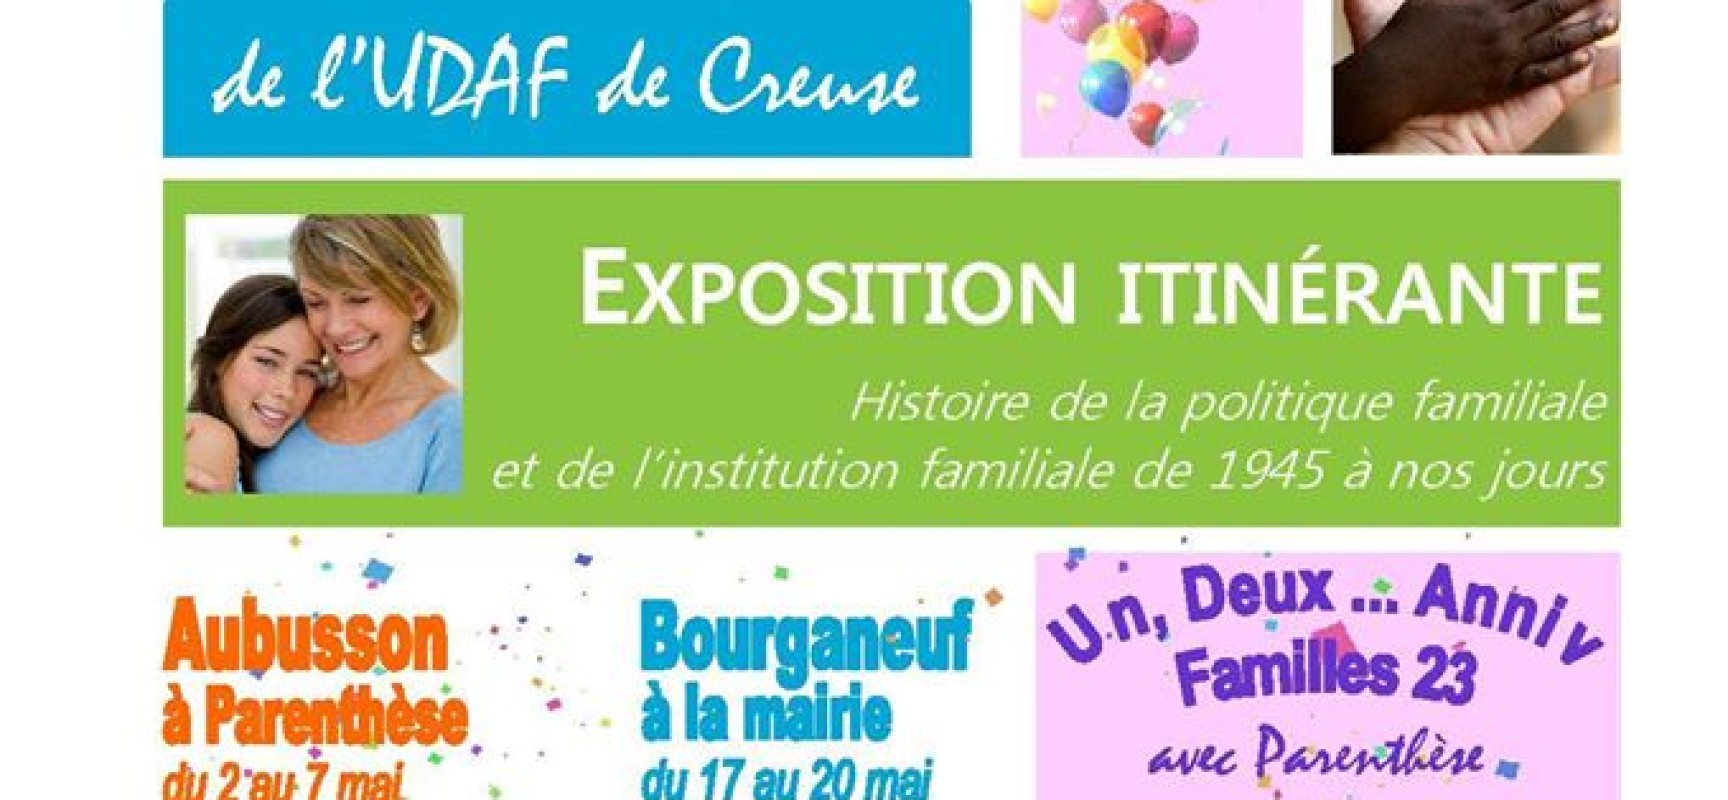 Exposition itinérante de l’Udaf de Creuse